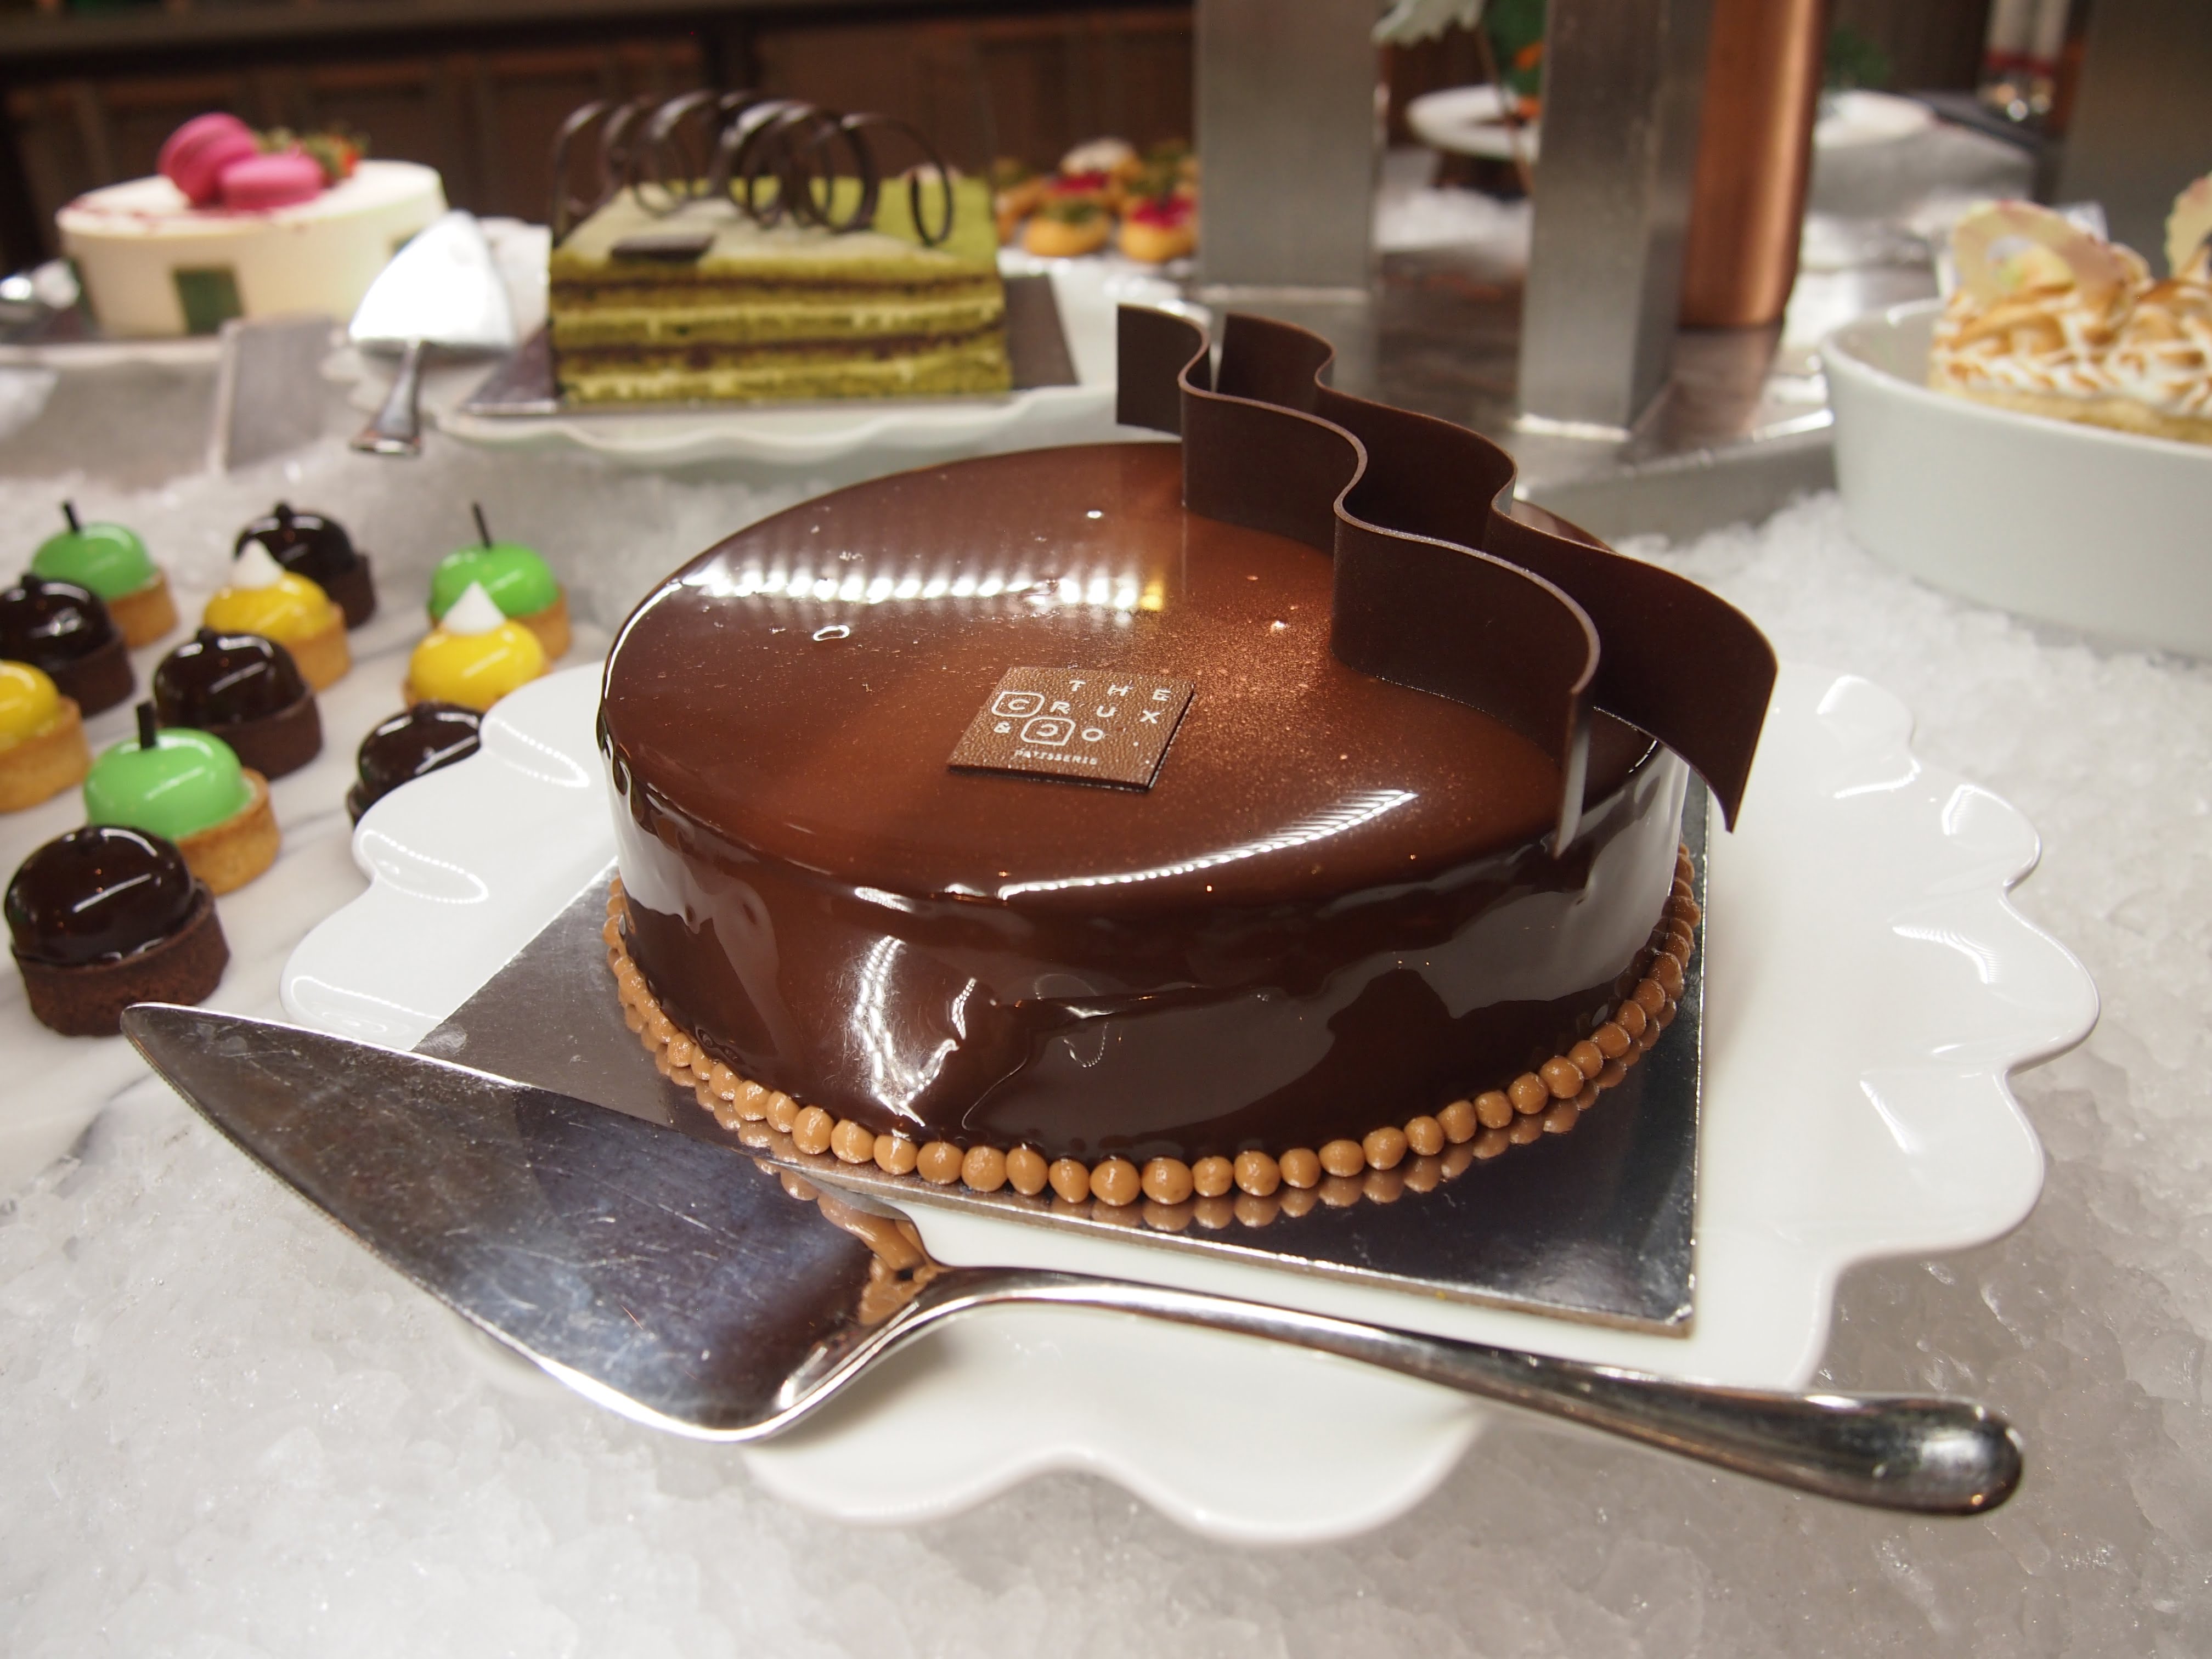 sheraton-melbourne-hotel-chocolate-cake